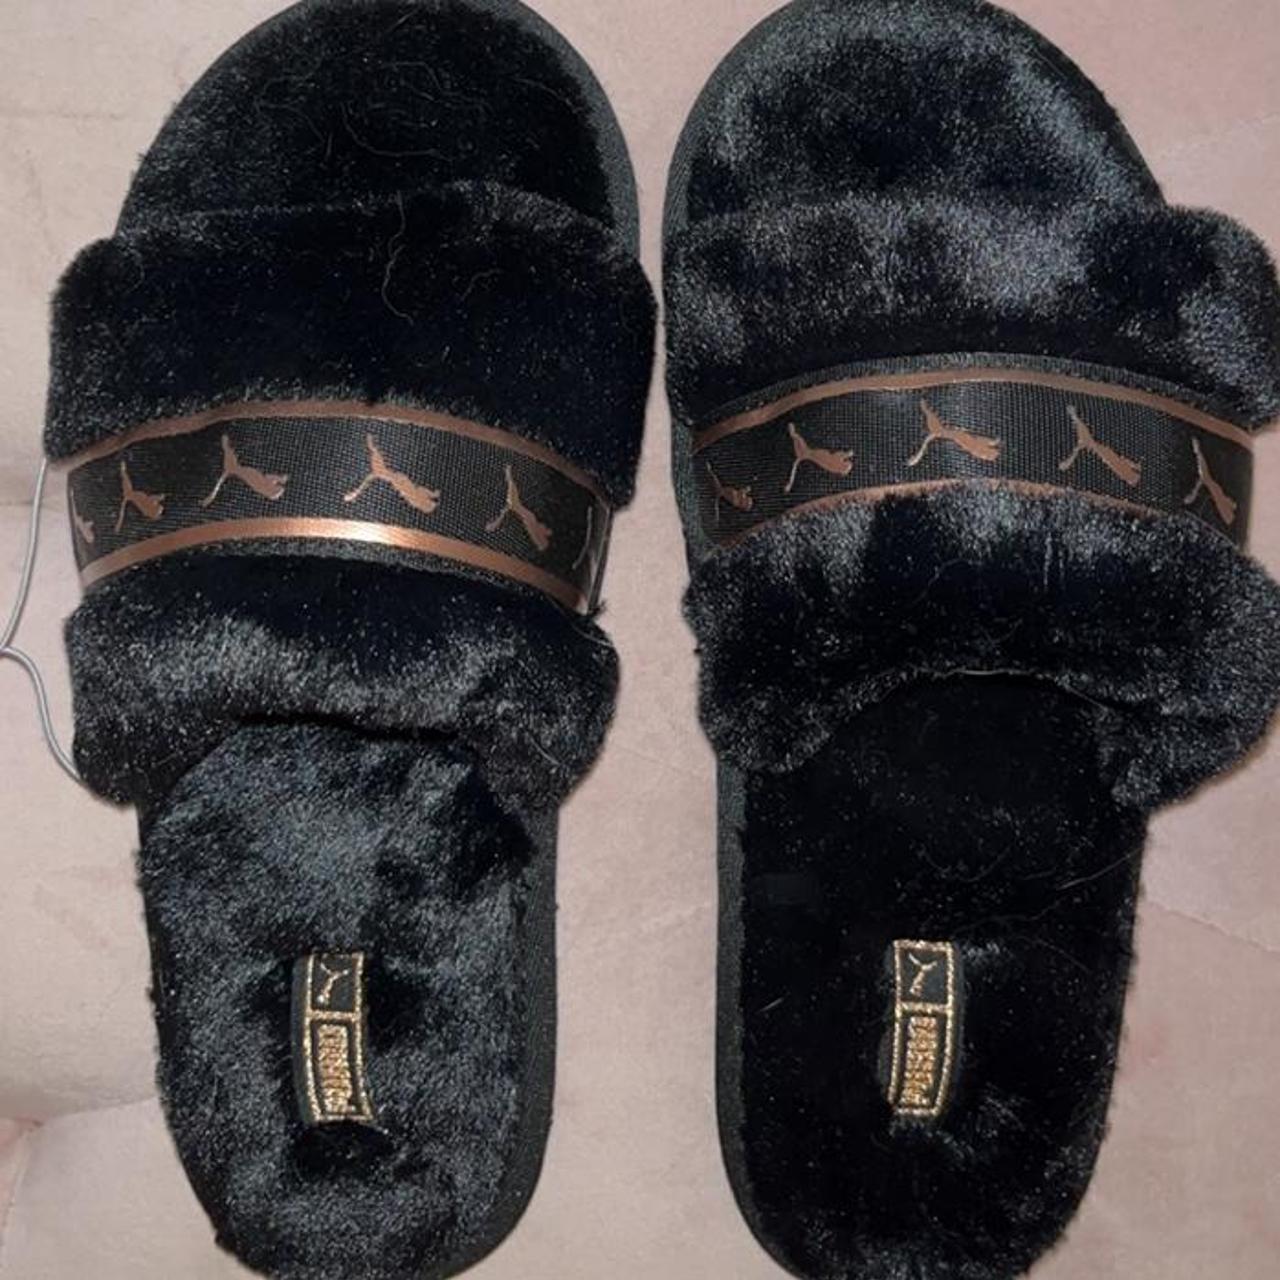 Puma fuzzy house slippers brand new - Depop